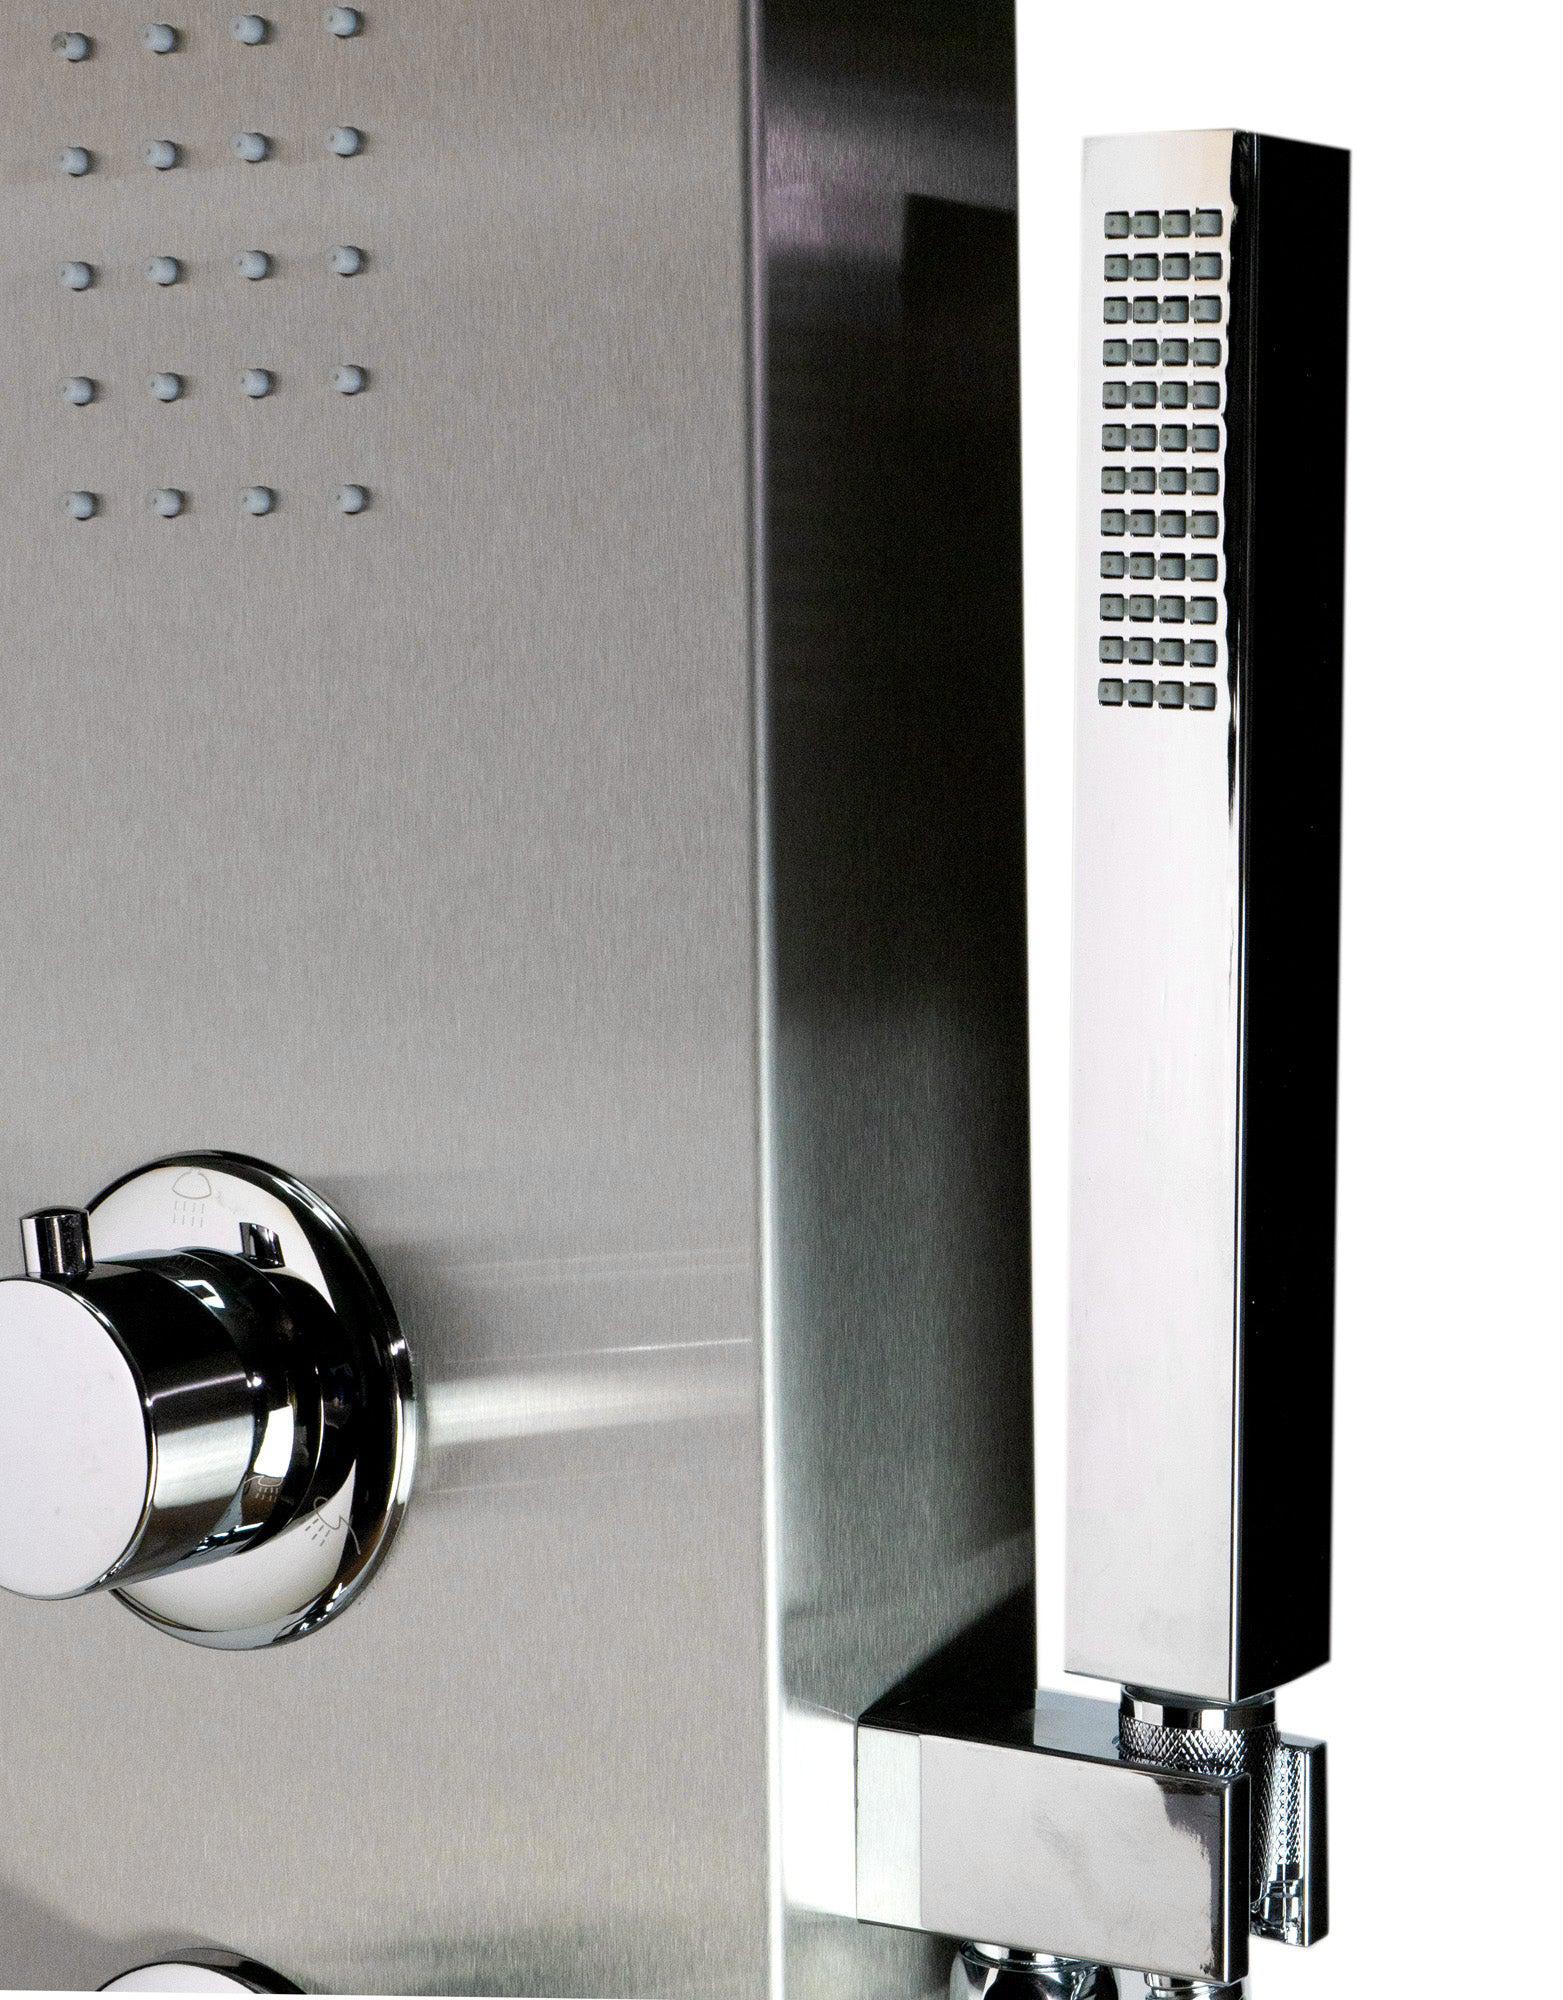 Alfi Brand ABSP20 Modern Stainless Steel Shower Panel with 2 Body Sprays-DirectSinks